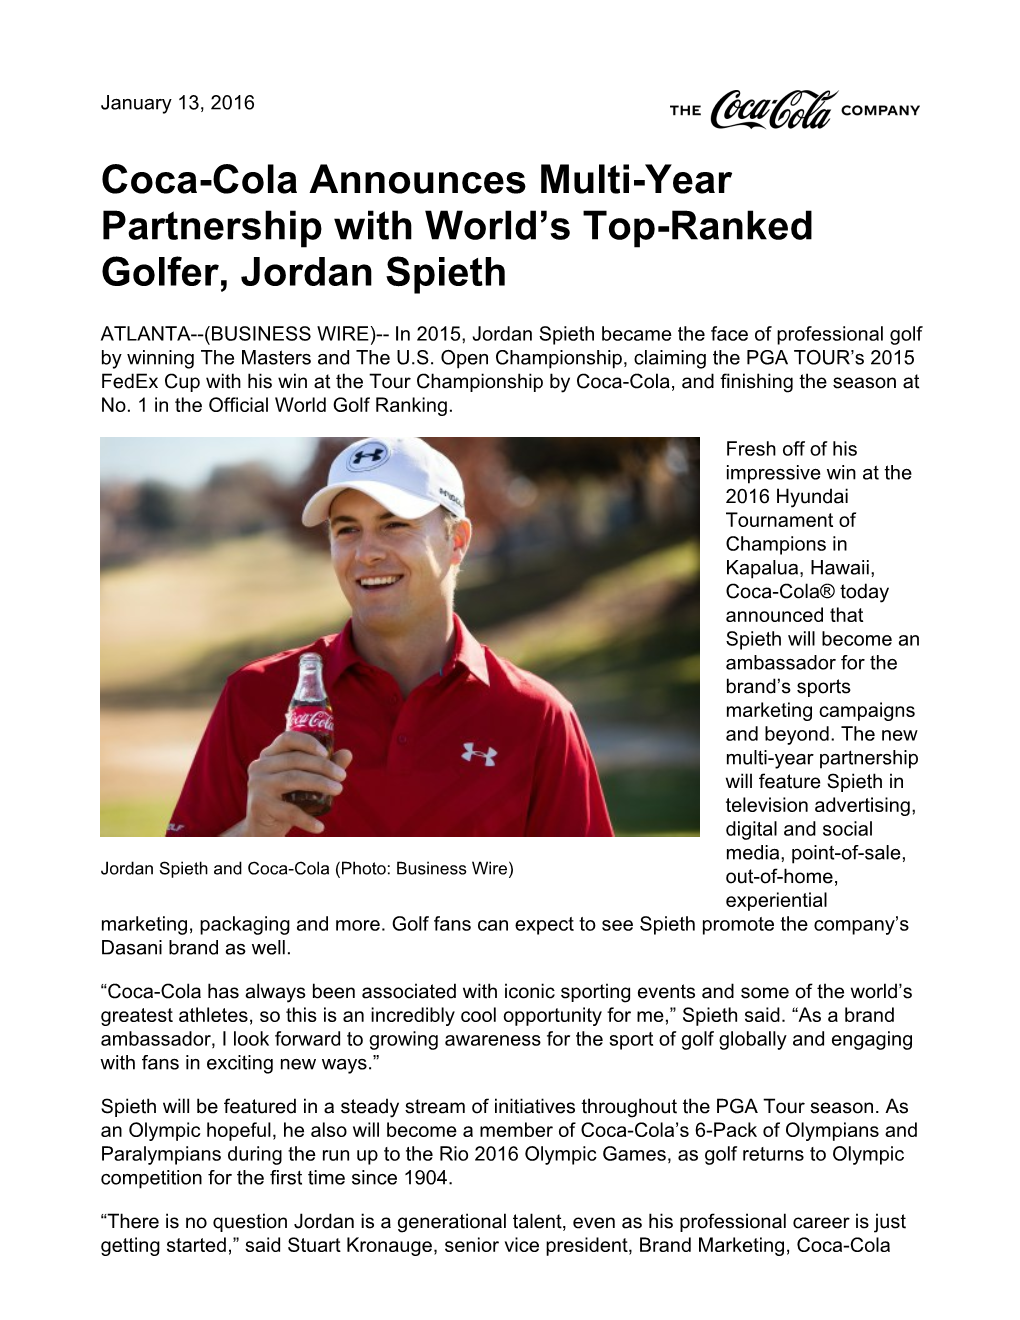 Coca-Cola Announces Multi-Year Partnership with World's Top-Ranked Golfer, Jordan Spieth